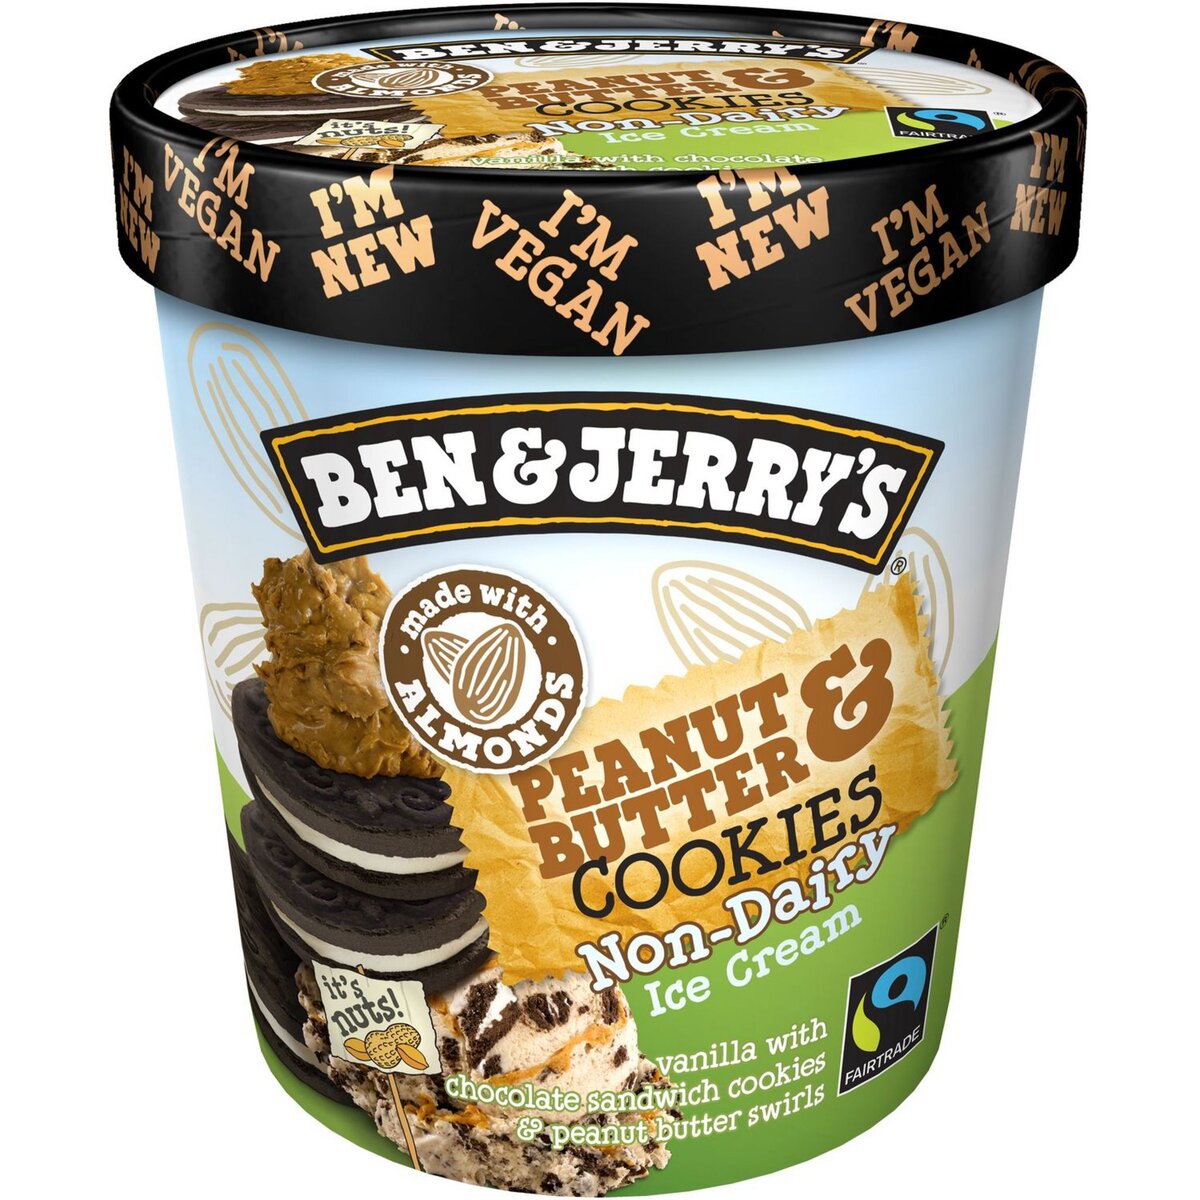 BEN & JERRY'S Ben&Jerry's Pot de glace peanut butter and cookie vegan 406g 406g